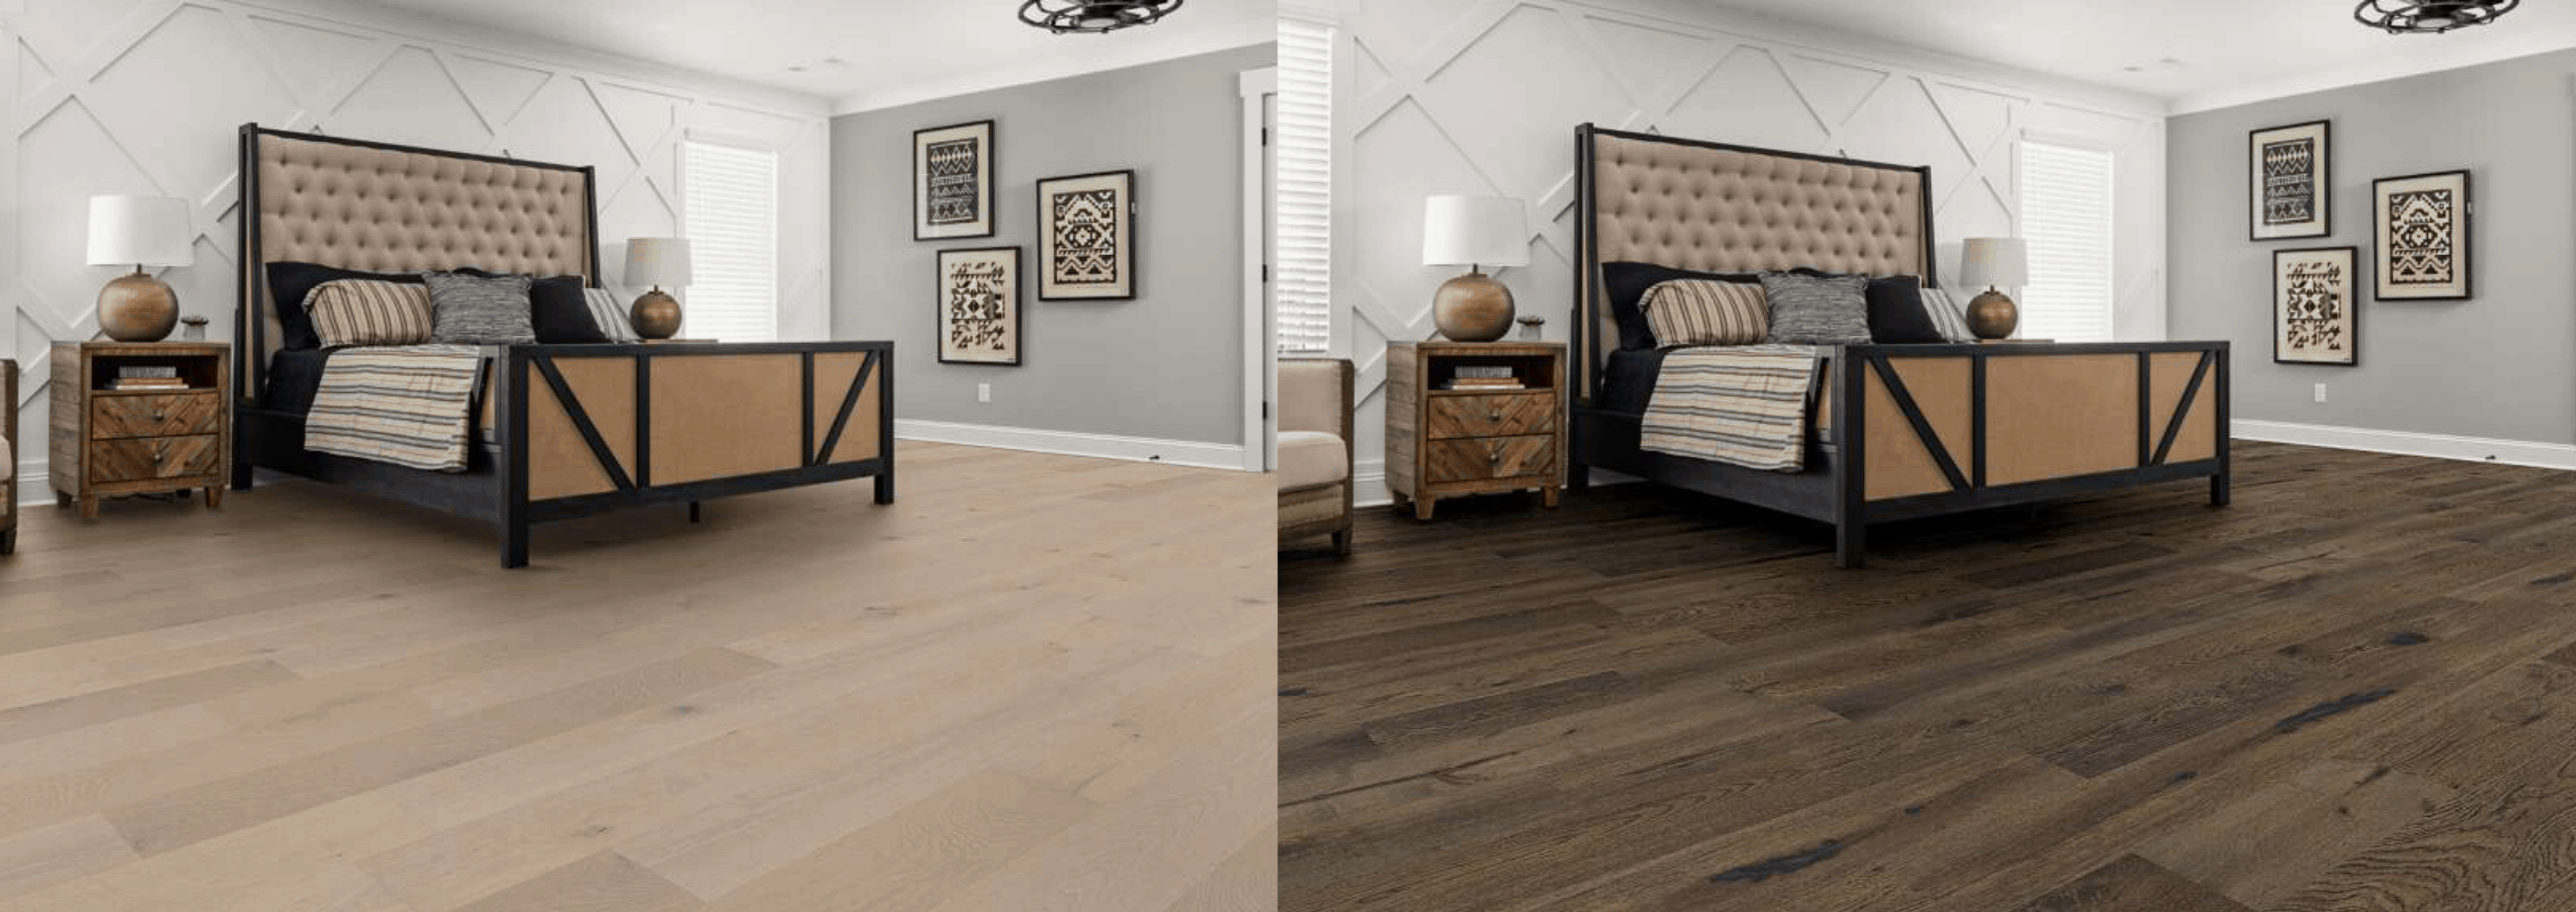 Shaw Floors Side-by-side comparison of Light Vs Dark Flooring